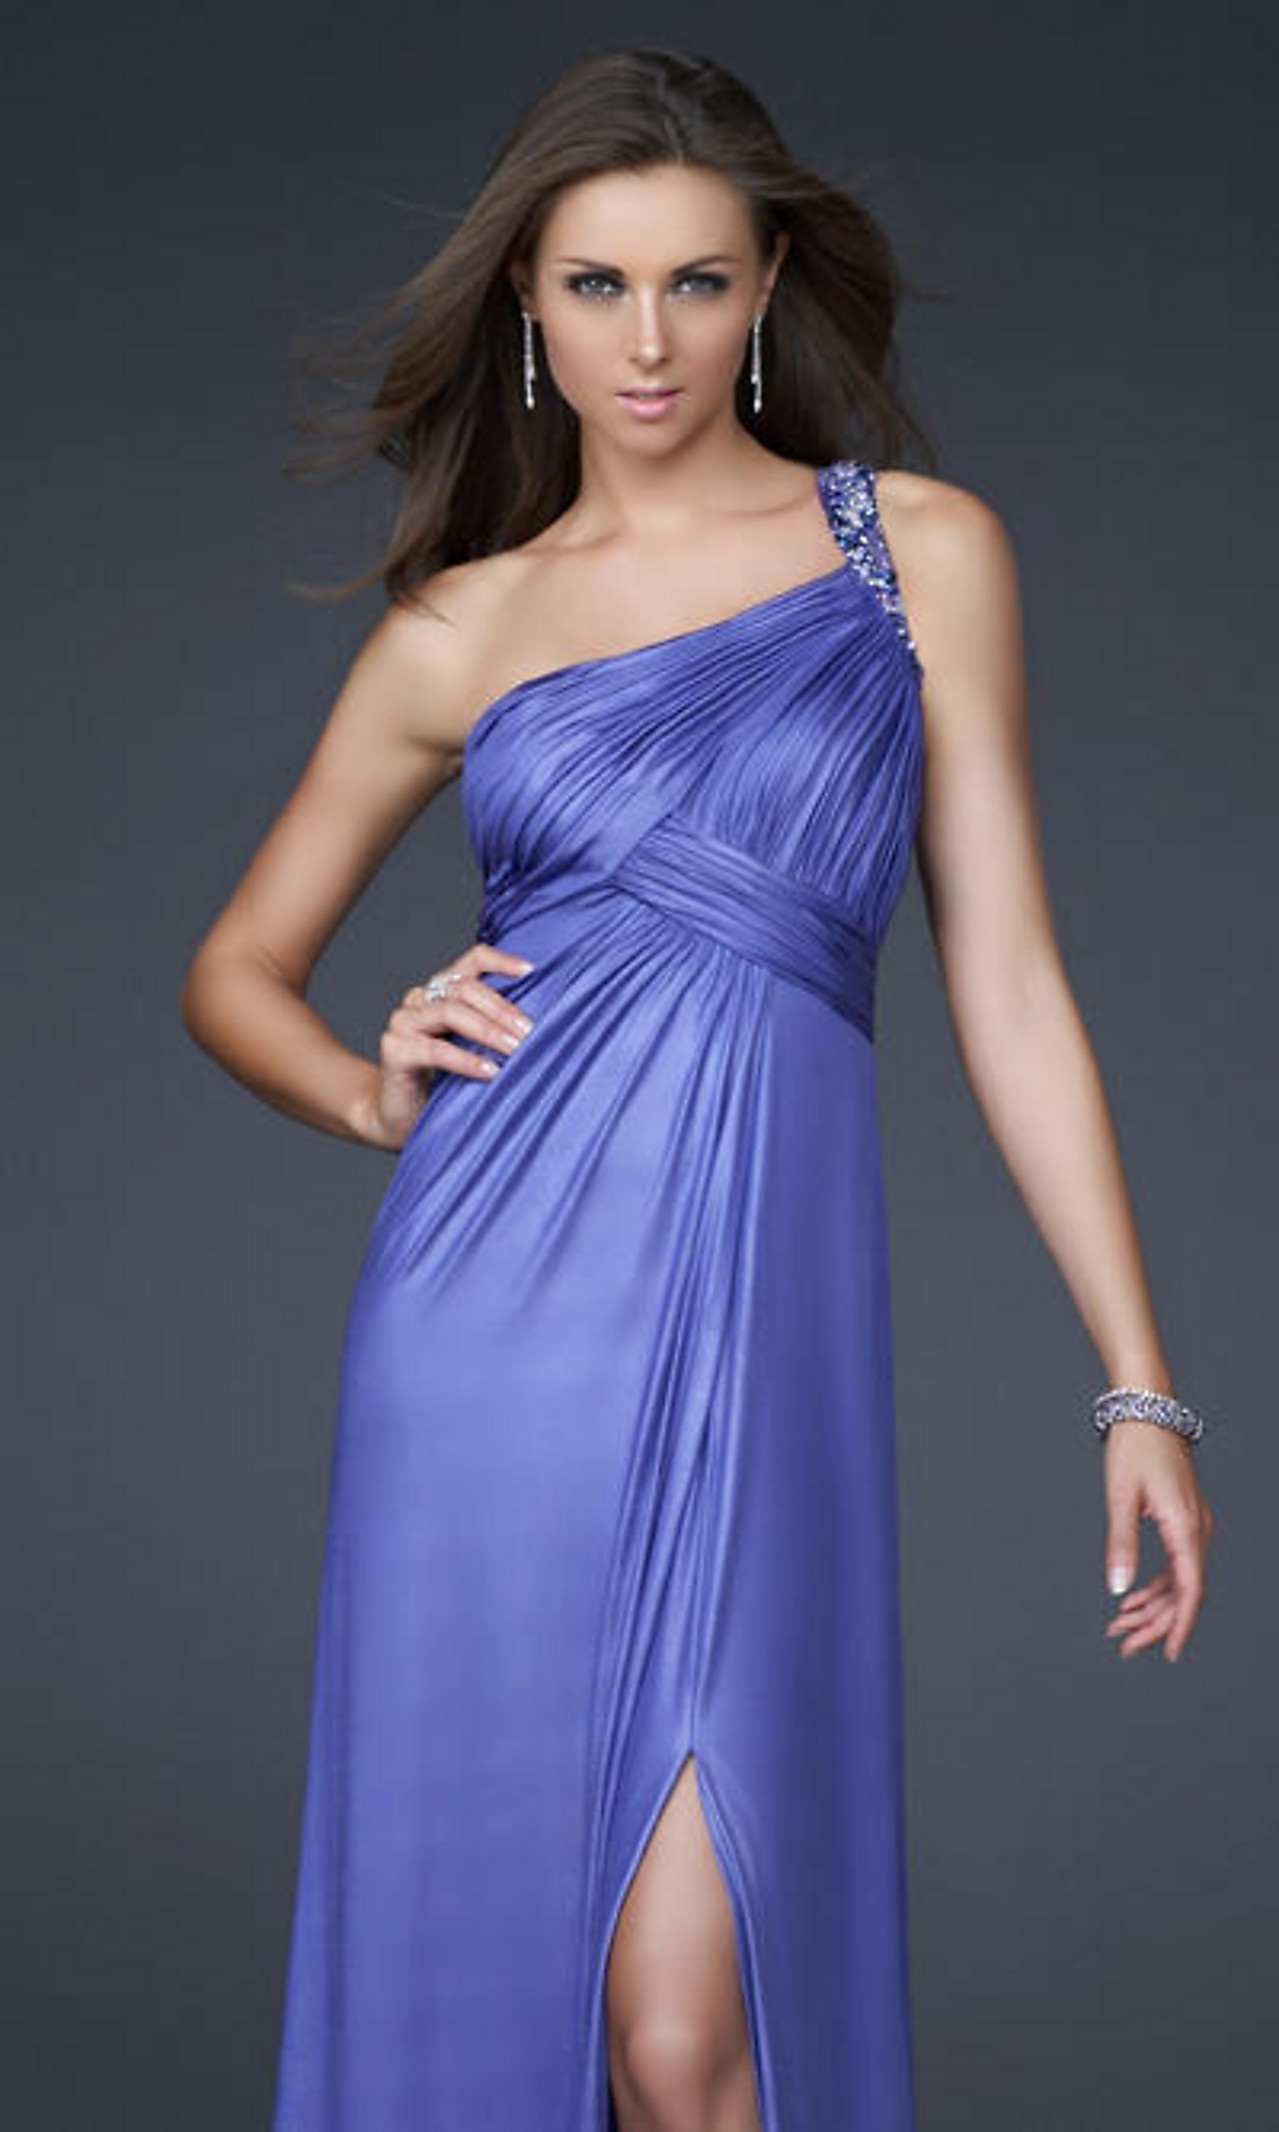 One-Shoulder Lavender Elastic Chiffon Prom Gown of Beaded Shoulder Strap and Slit Skirt